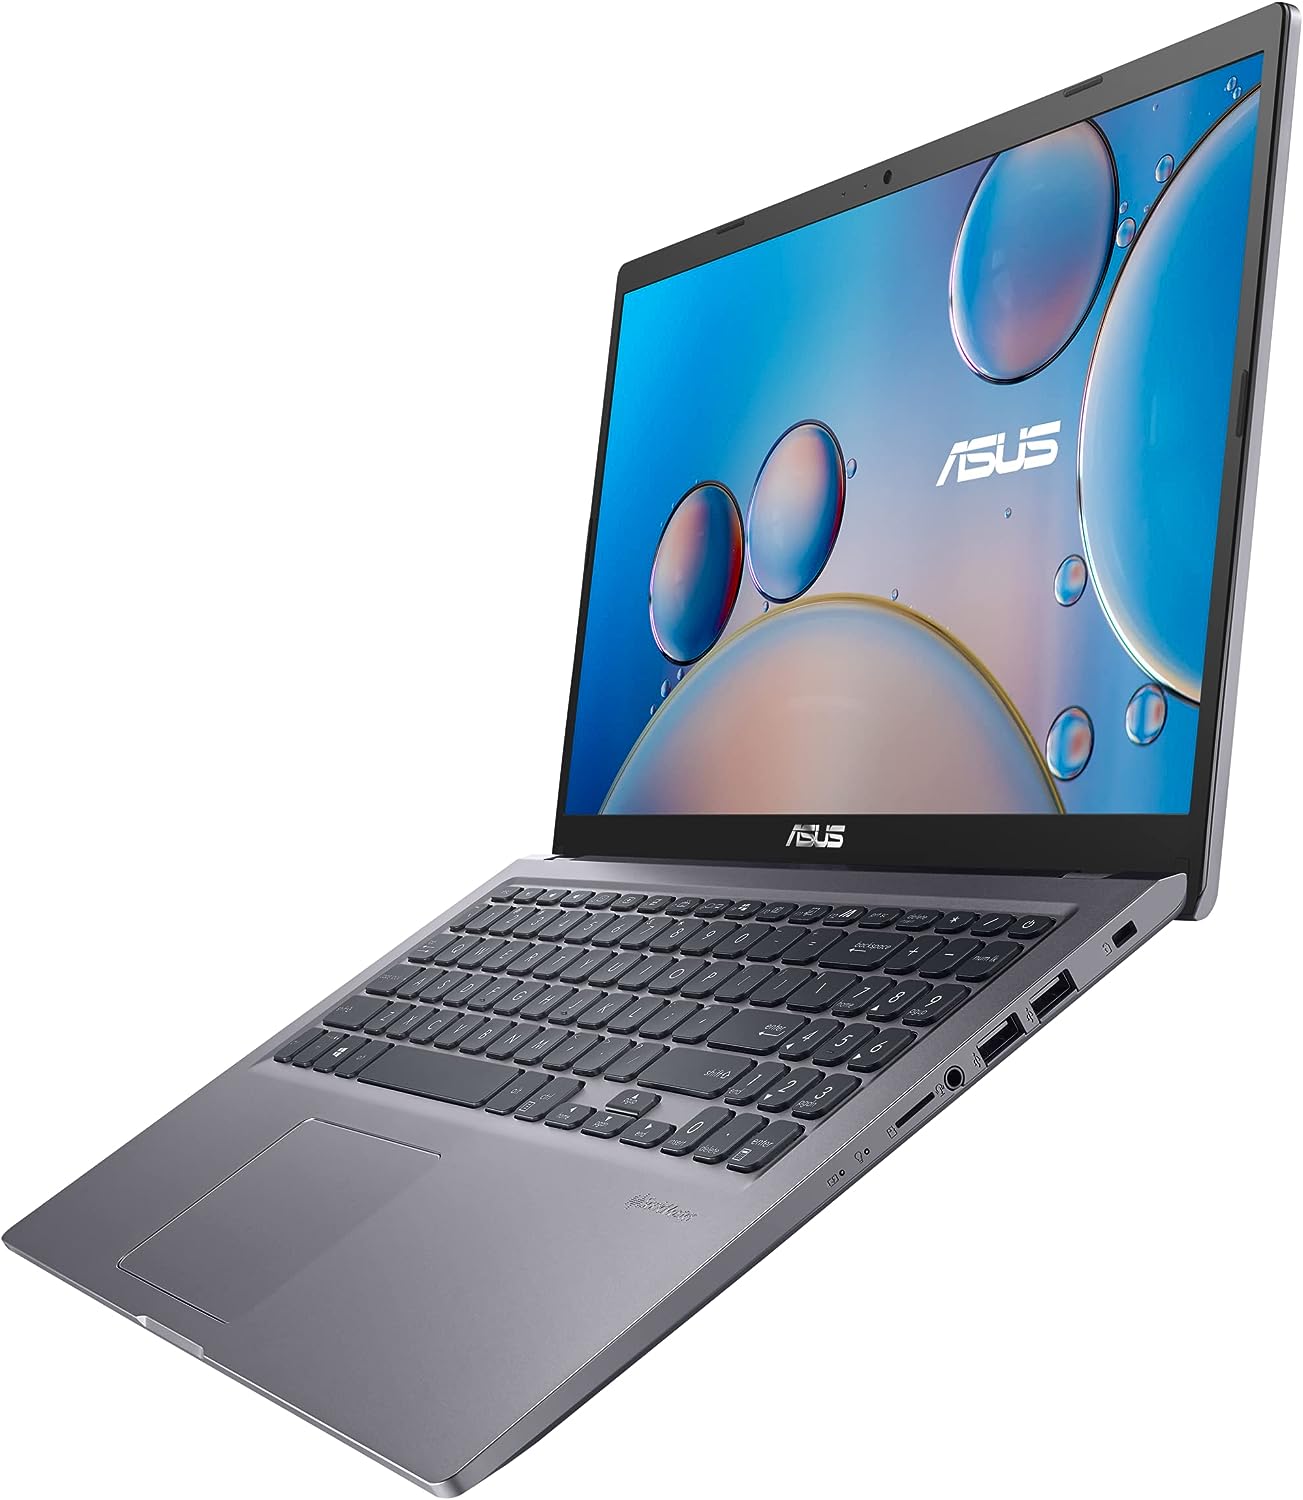 ASUS VivoBook 15 F515 Laptop, 15.6